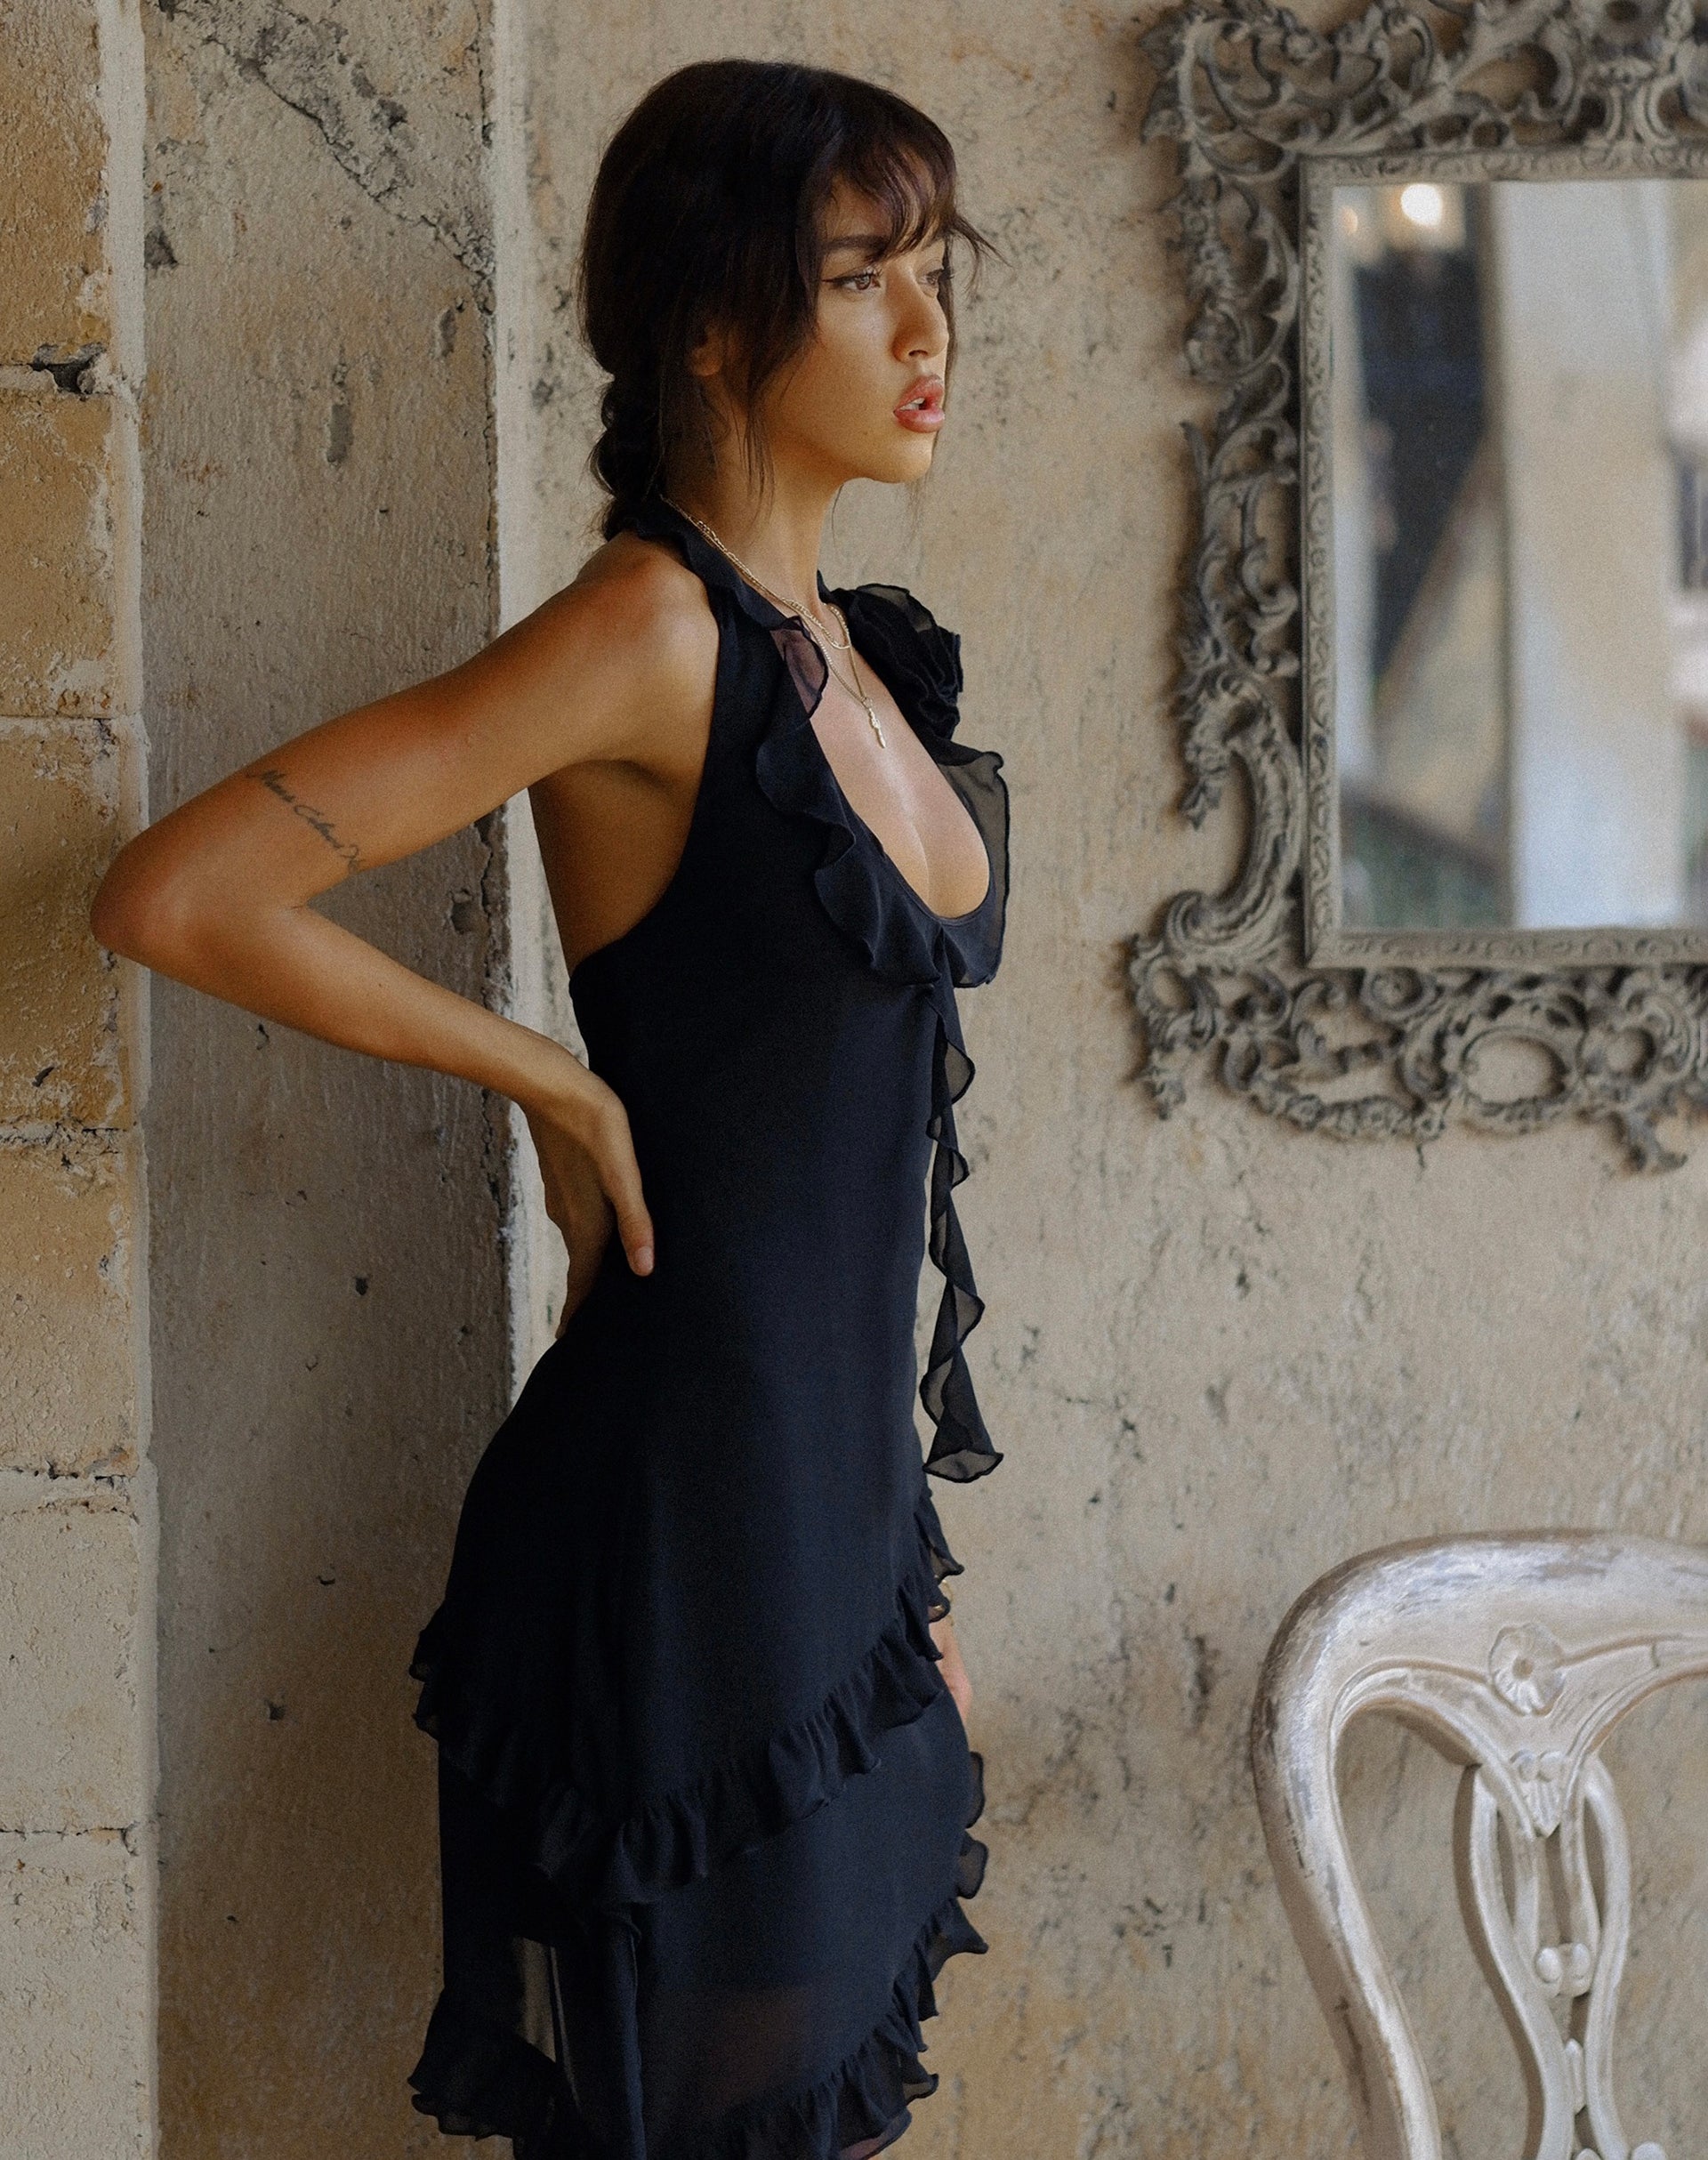 Chanel Black Lace Dress - Desert Vintage